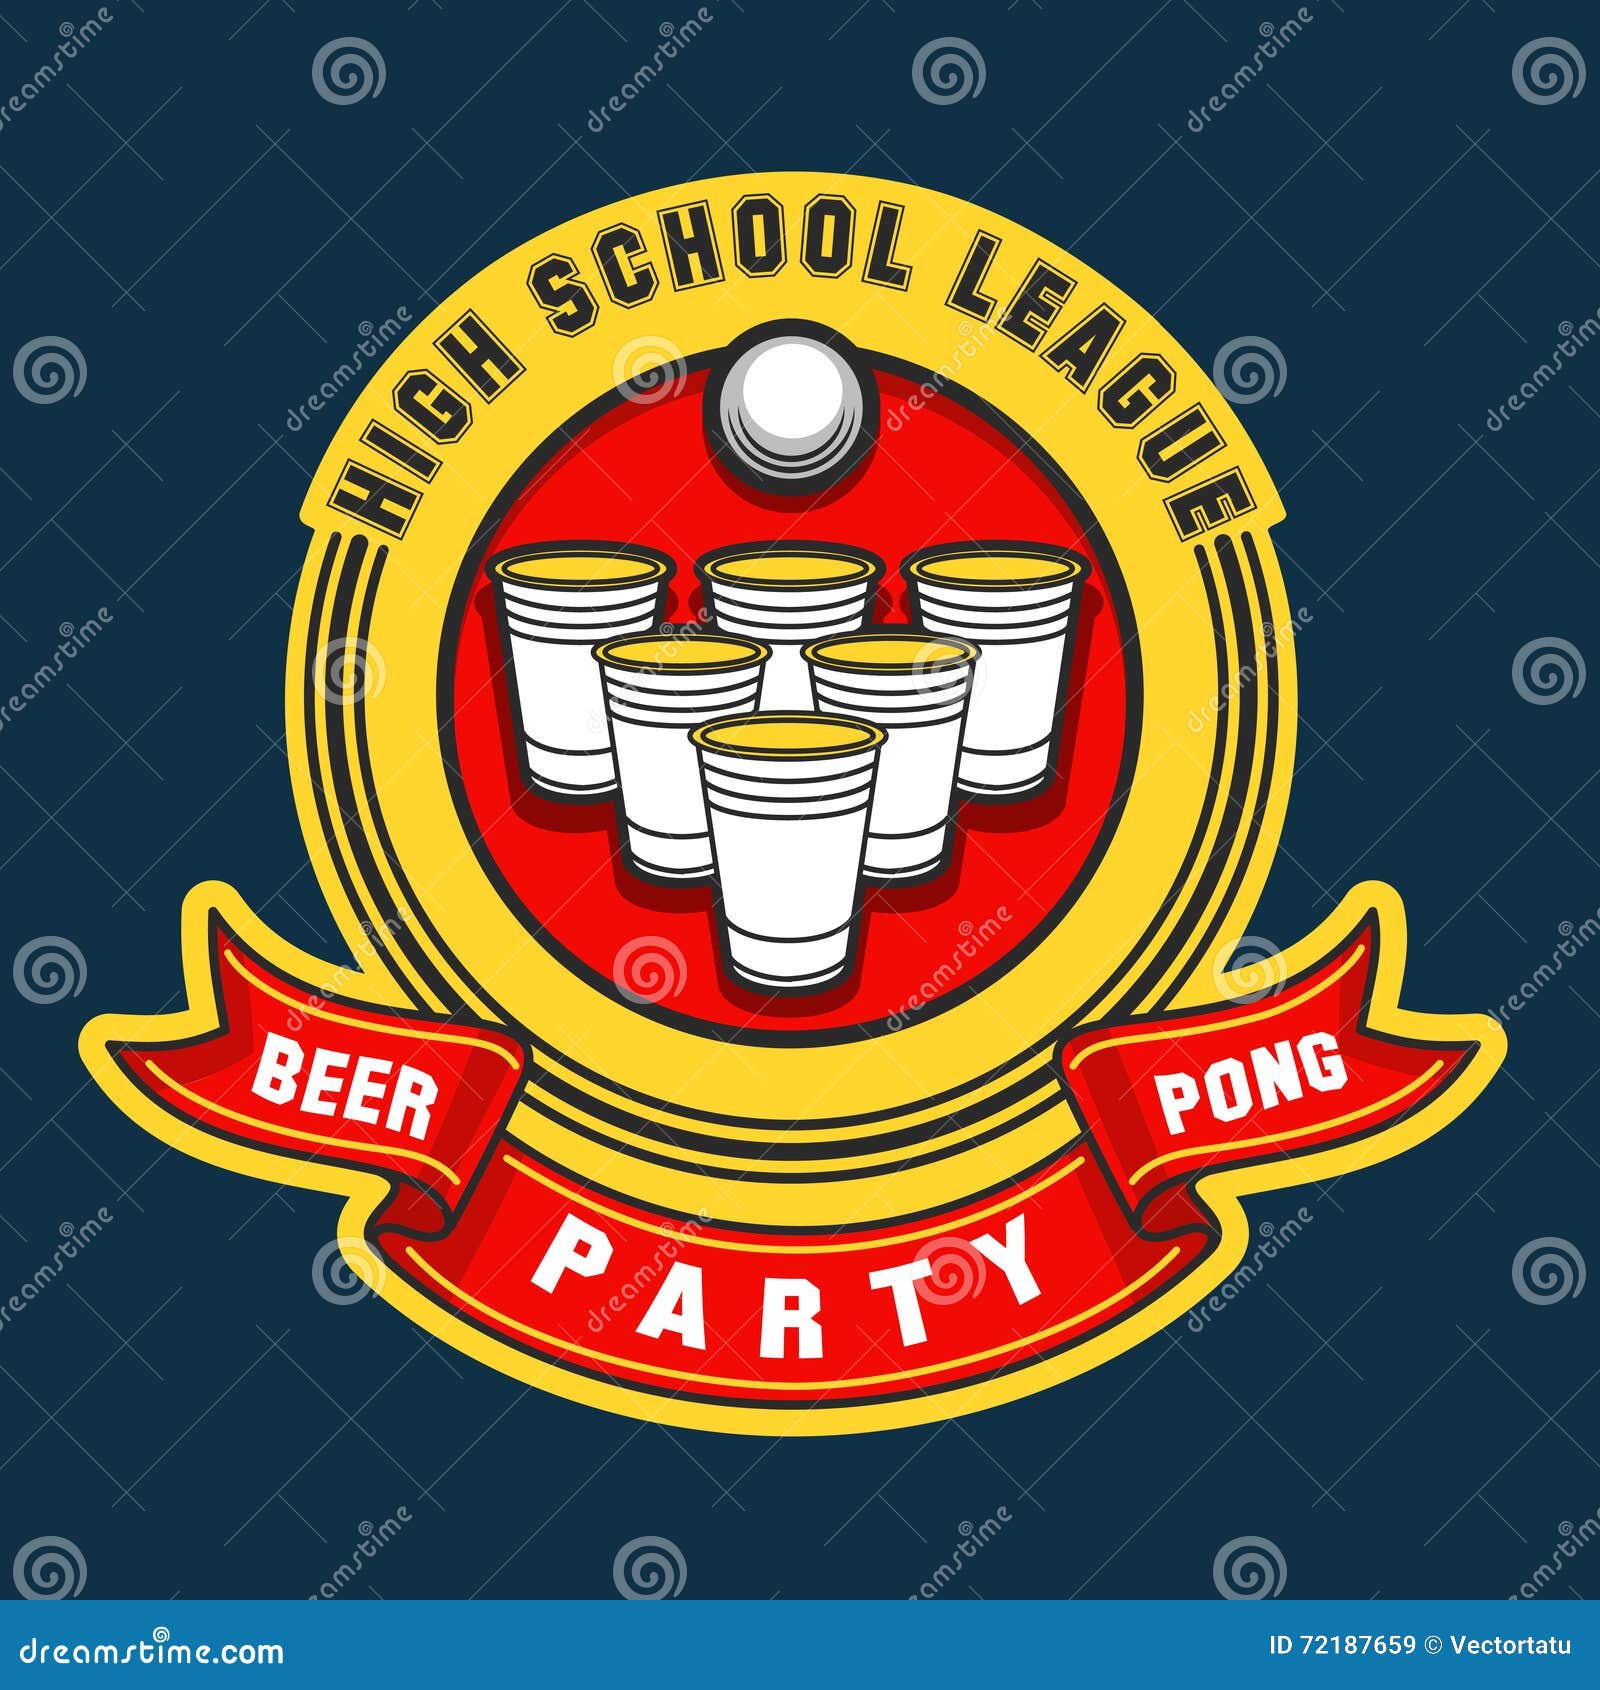 Beer Pong Champion Beer Label, beer pong 